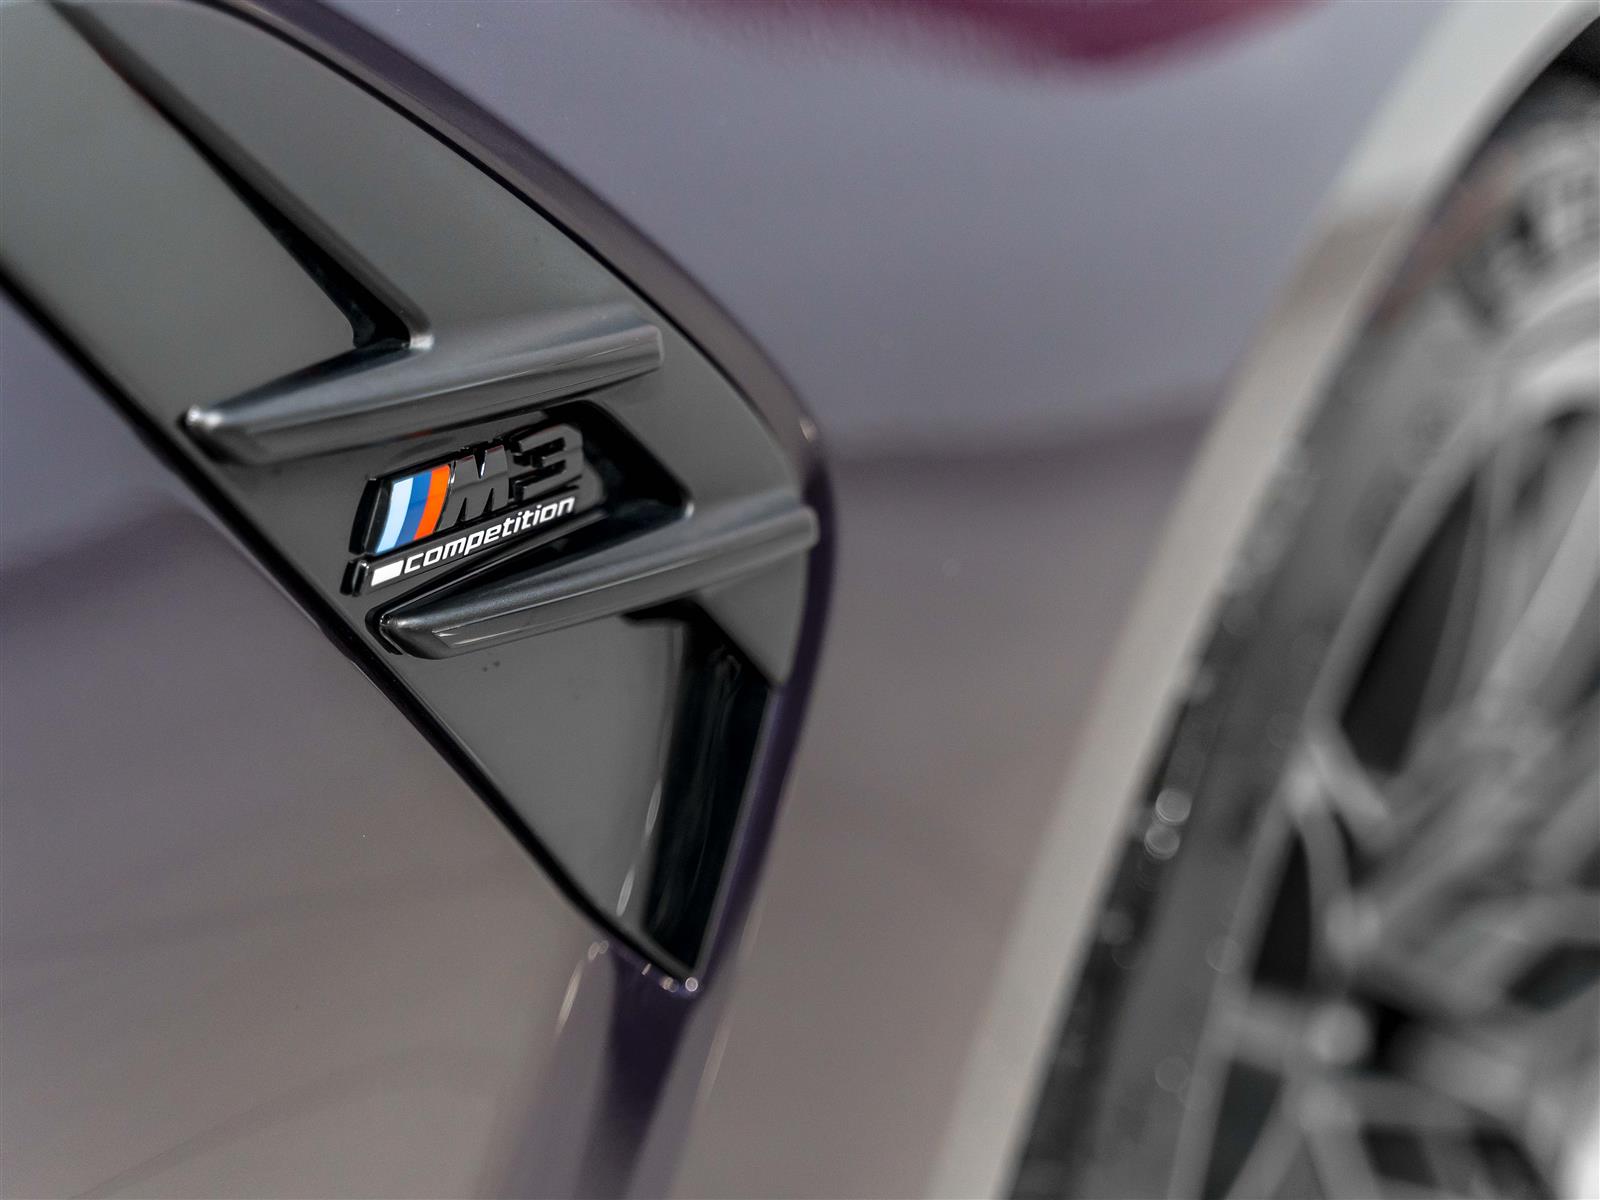 BMW M3, 8000 km, 4 doors, Techno violet metallic, North York